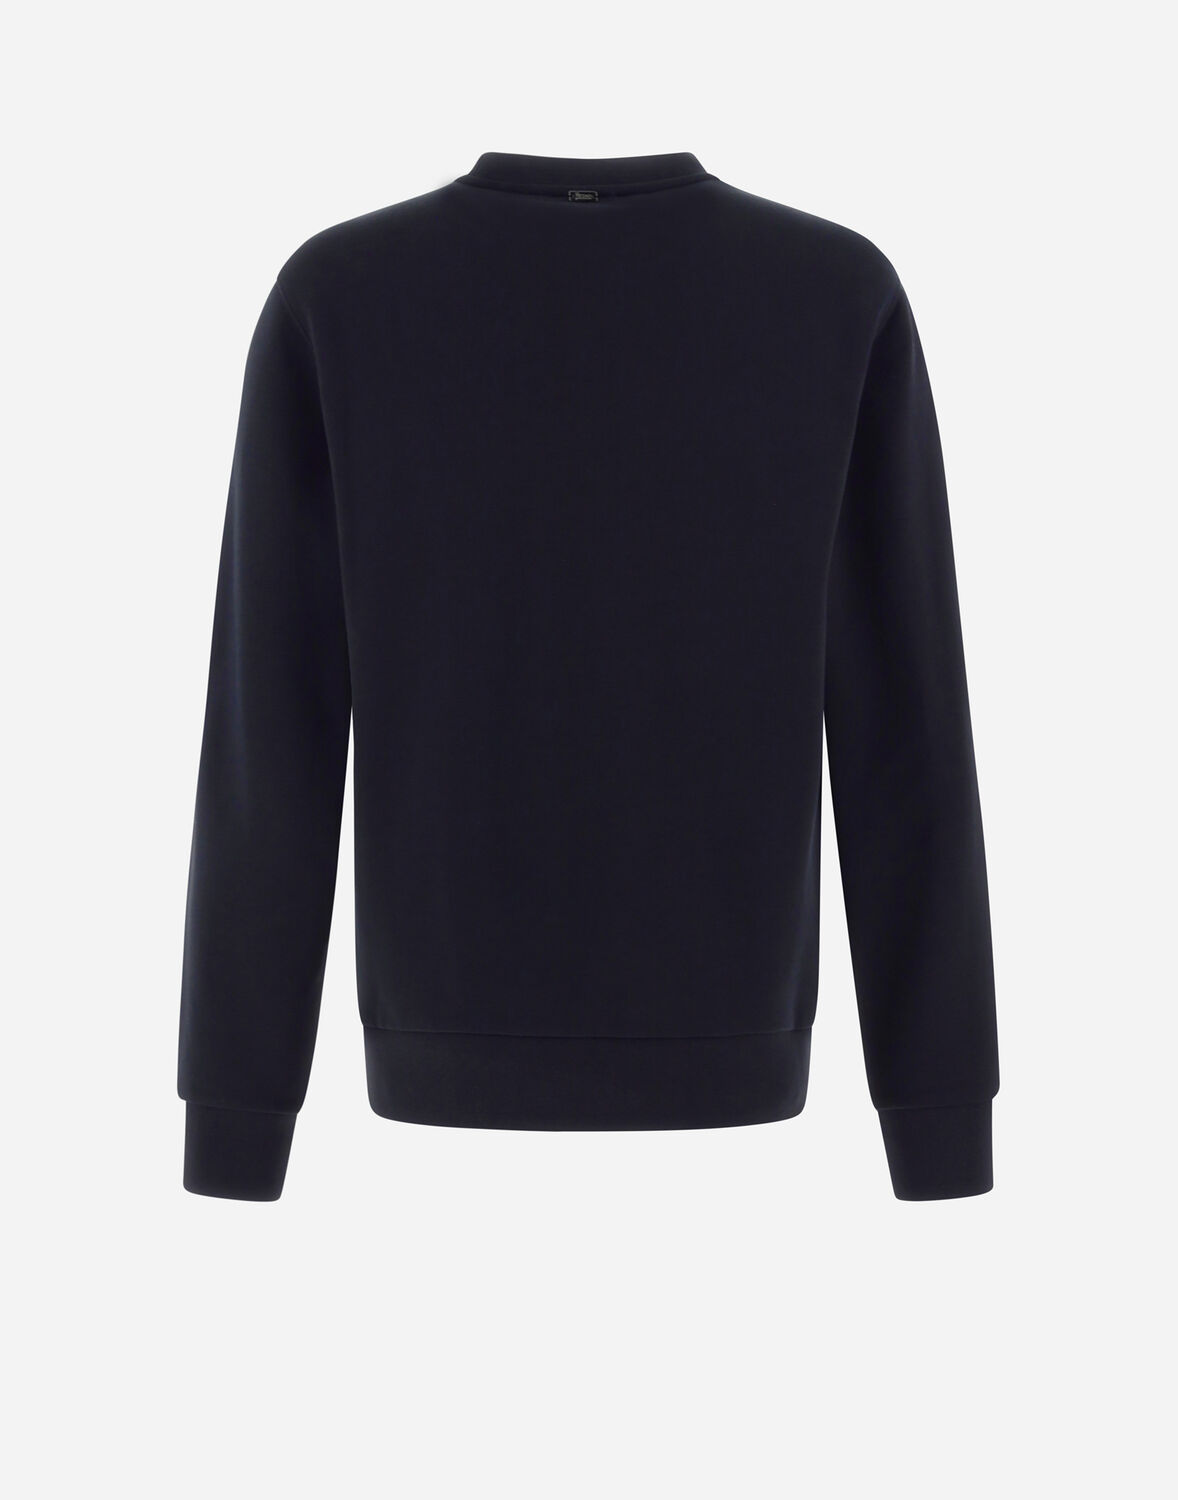 Shop Herno Cotton Sweater スウェットシャツ In Navy Blue